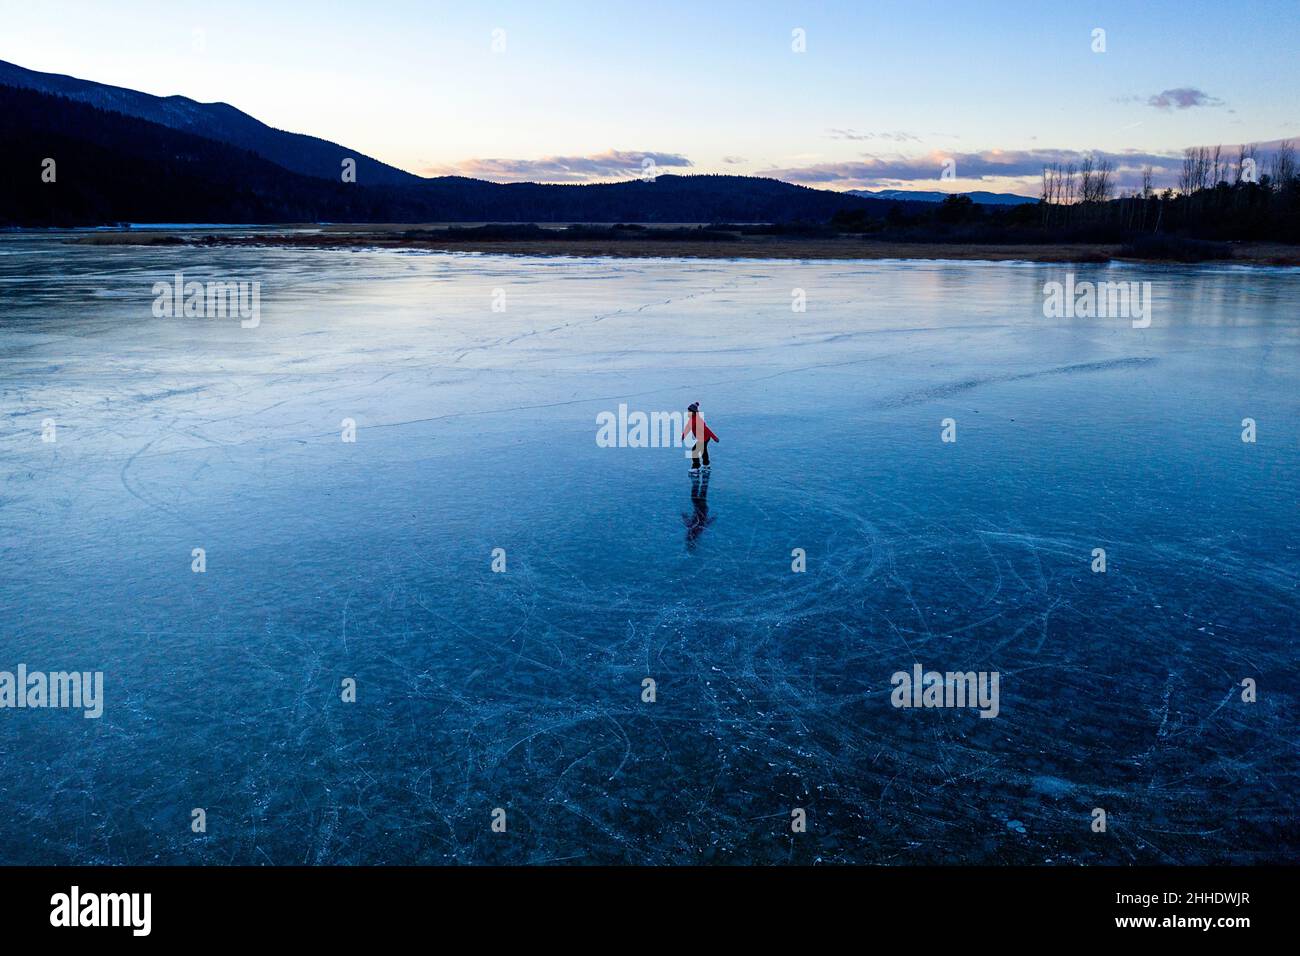 Woman ice skating on frozen intermittent lake Cerknica, Slovenia at sunset Stock Photo